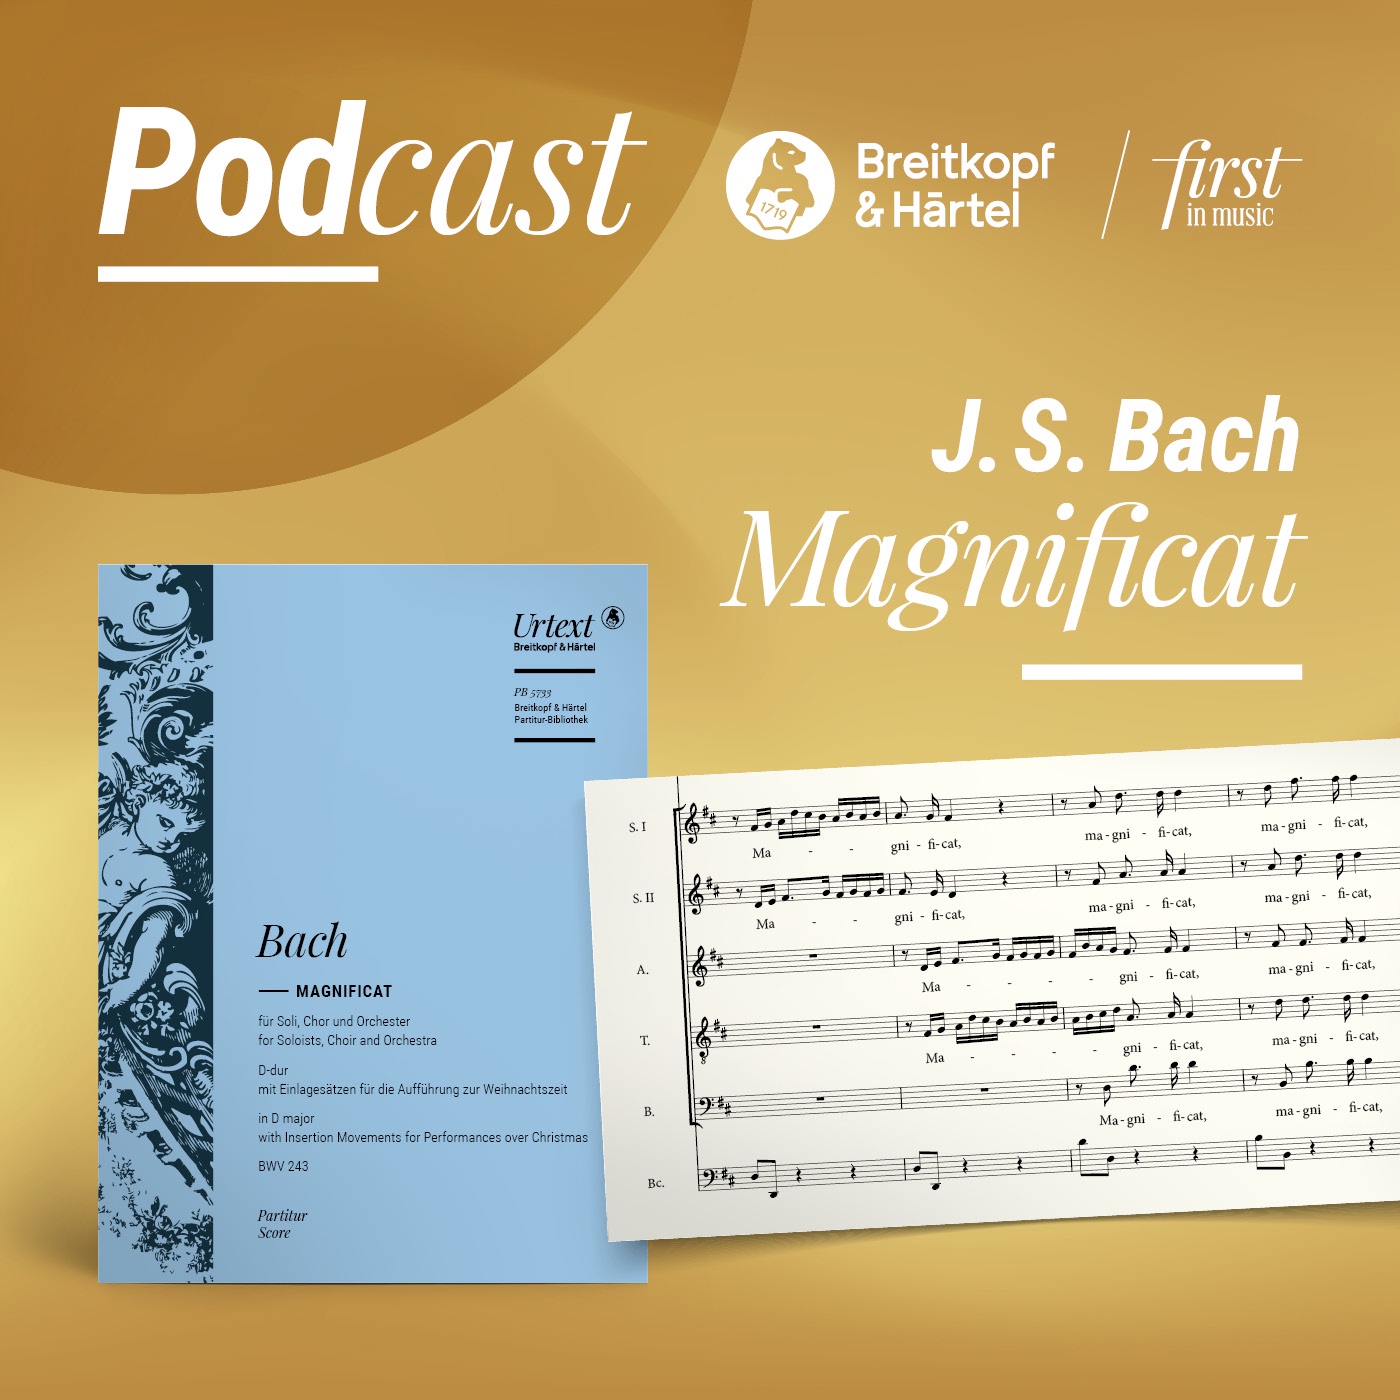 Johann Sebastian Bachs Magnificat: Das Unvergleichliche unter vielen